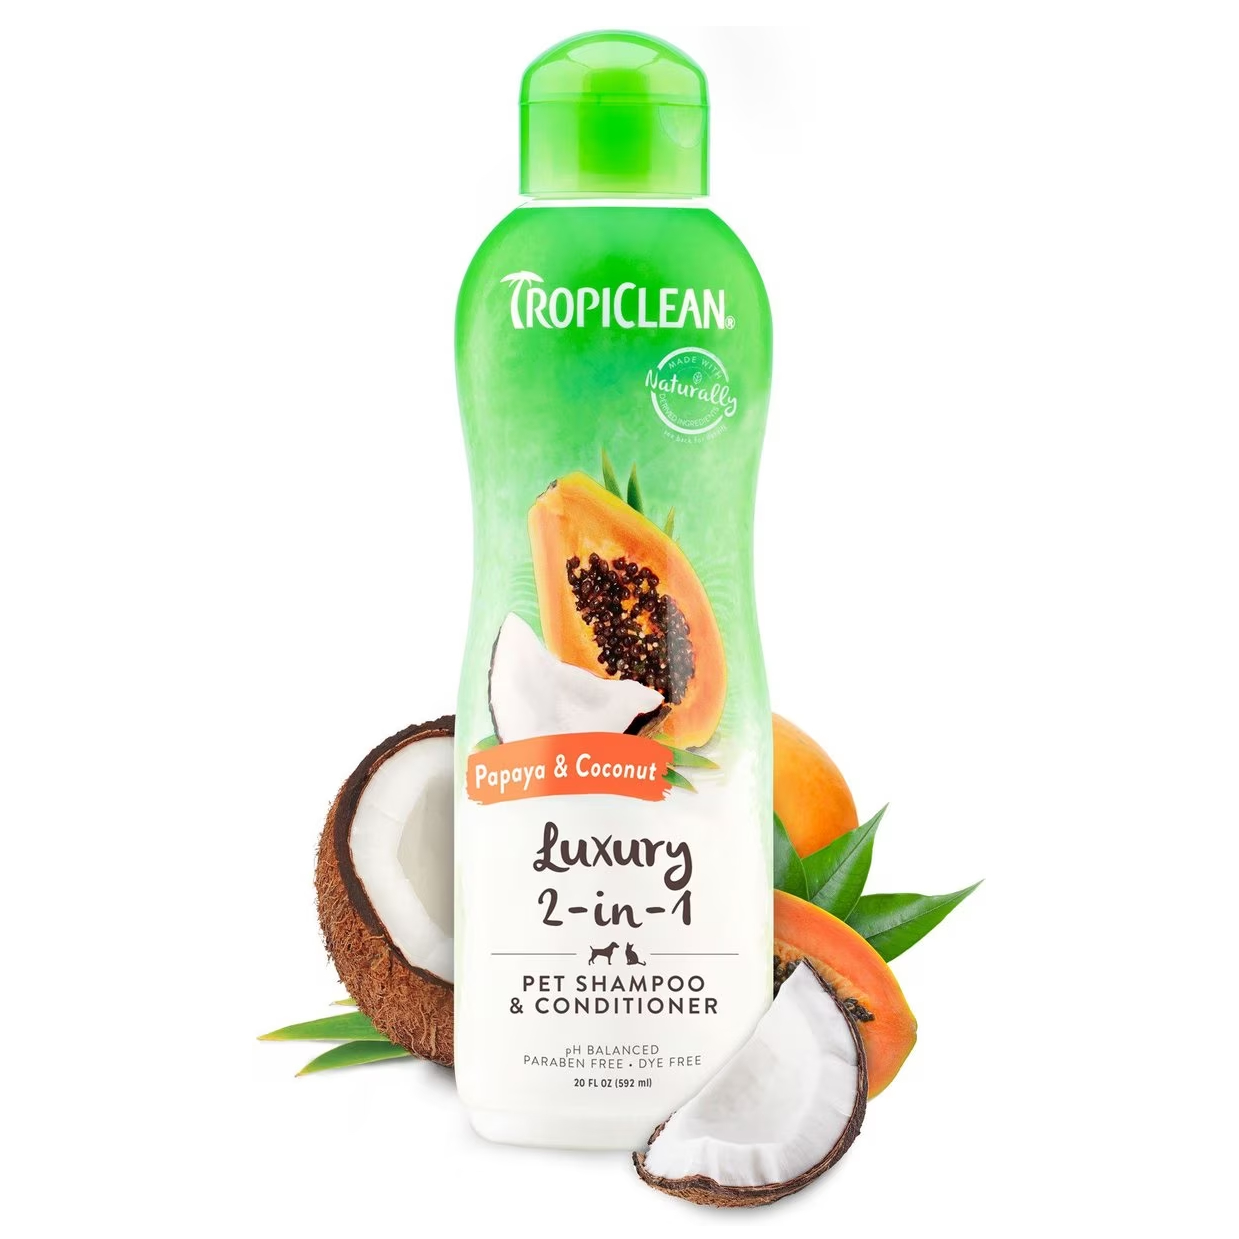 TropiClean Luxury 2-in-1 Papaya & Coconut Pet Shampoo & Conditioner